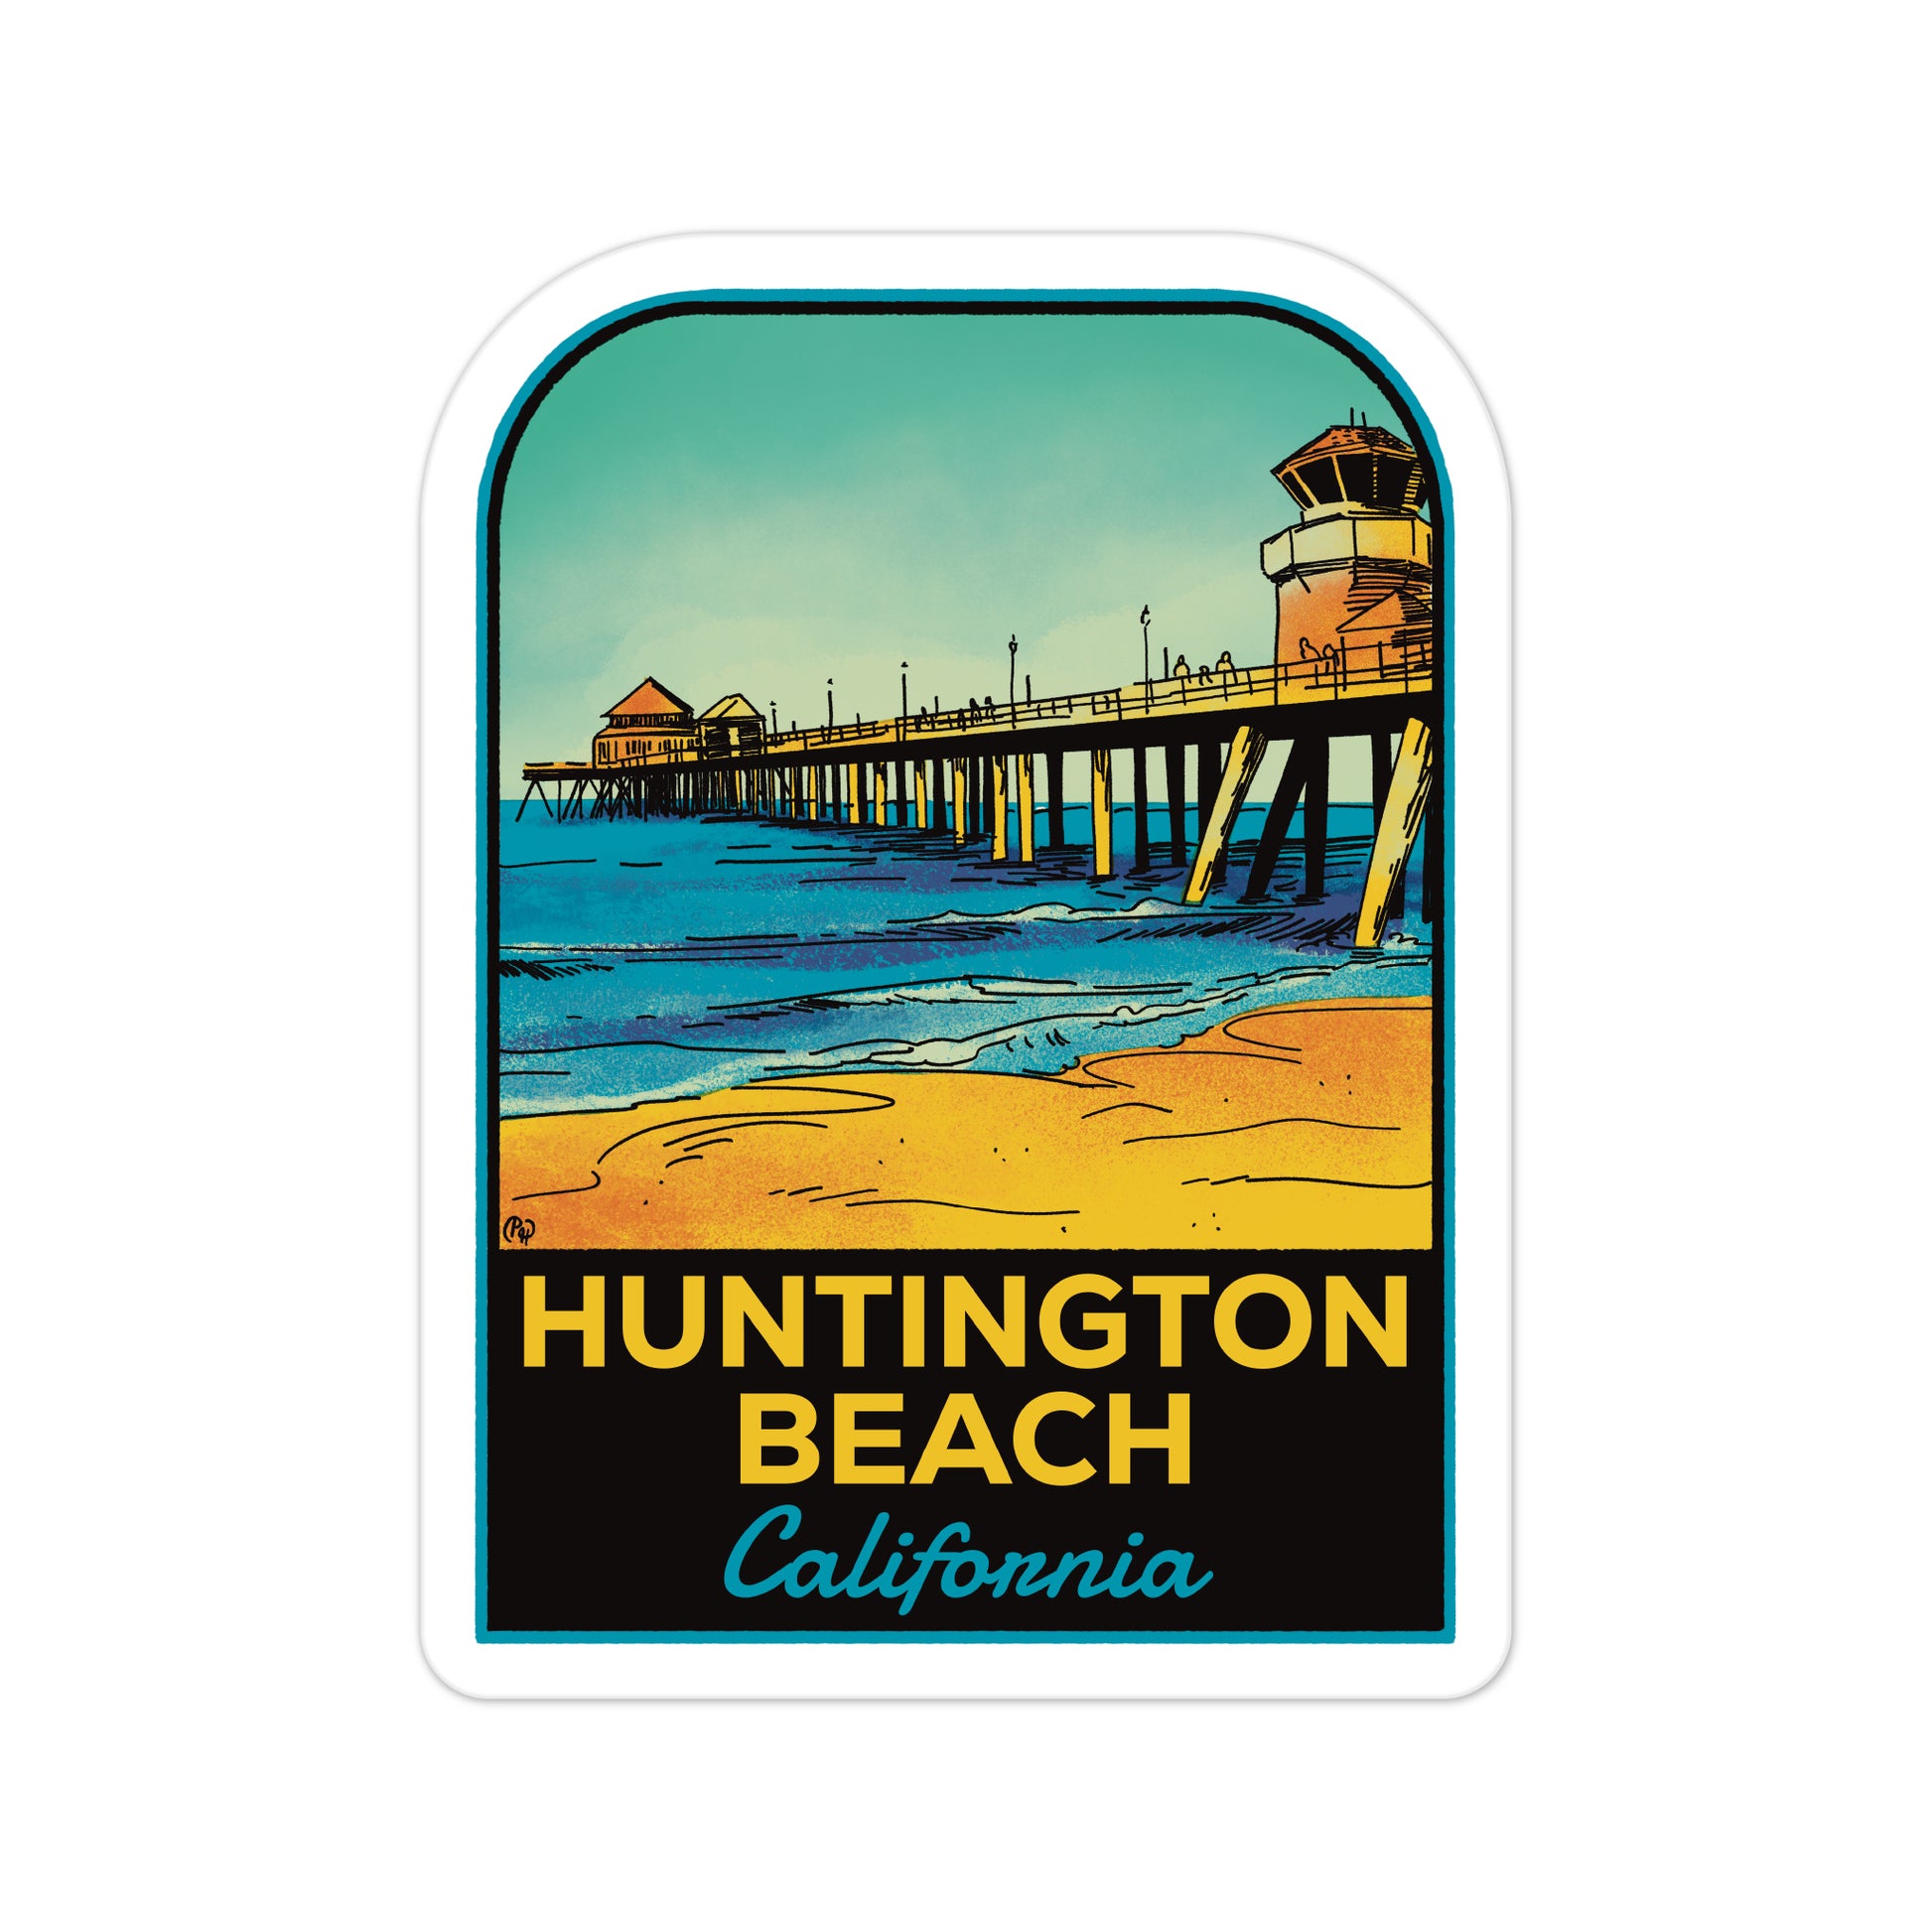 A sticker of Huntington Beach California